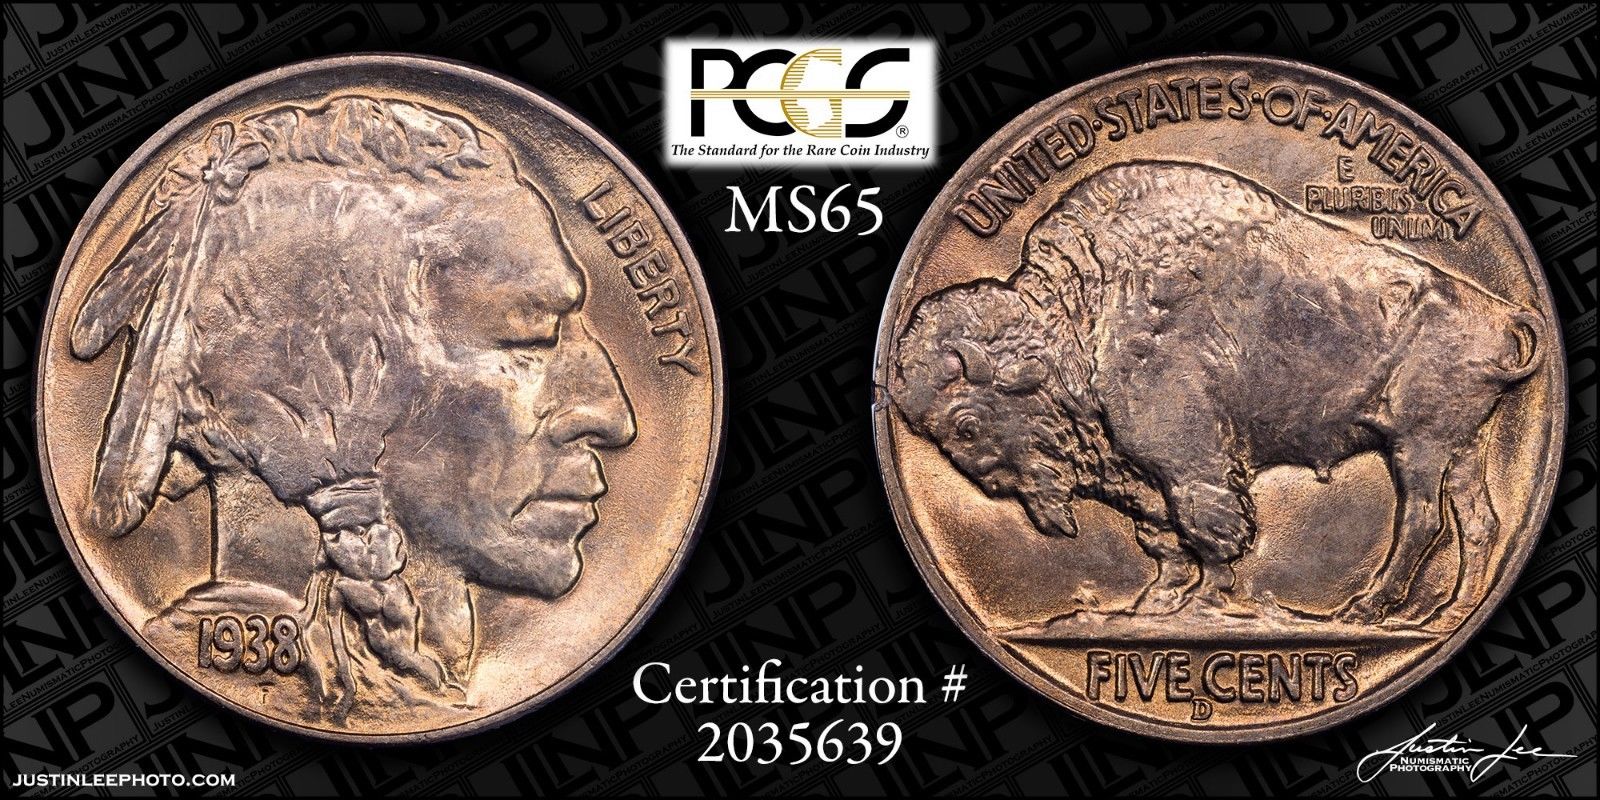 1938-D Buffalo Nickel gold toned PCGS MS-65 Rattler $40.00 + Ship 232772809932 jtlee 563 (1).jpg